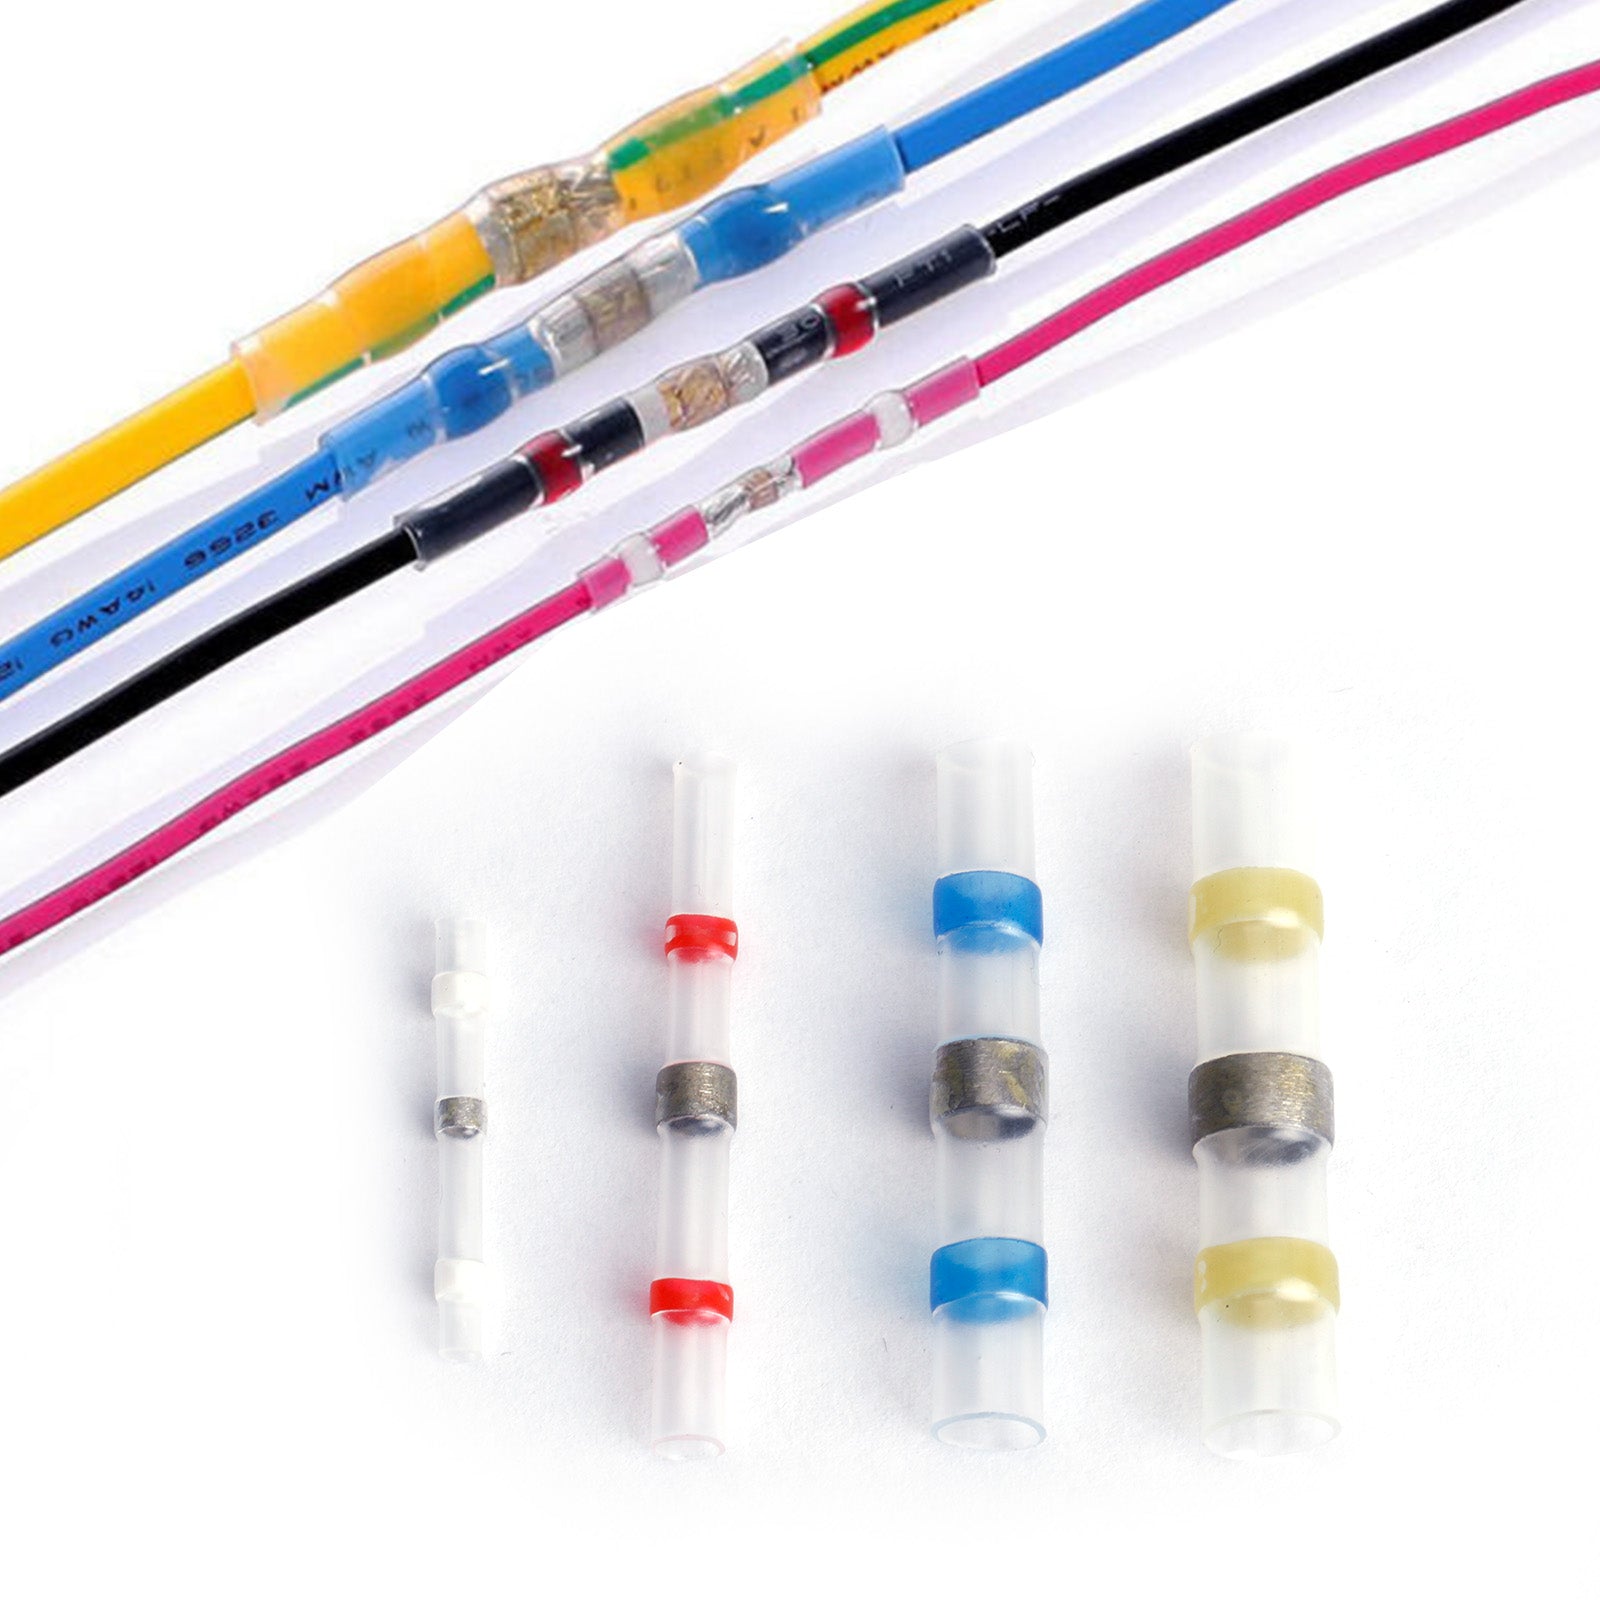 Blue Heat Shrink Solder Sleeve Wire Connectors - Electrical Connectors - Heat Shrink - spo-cs-disabled - spo-default